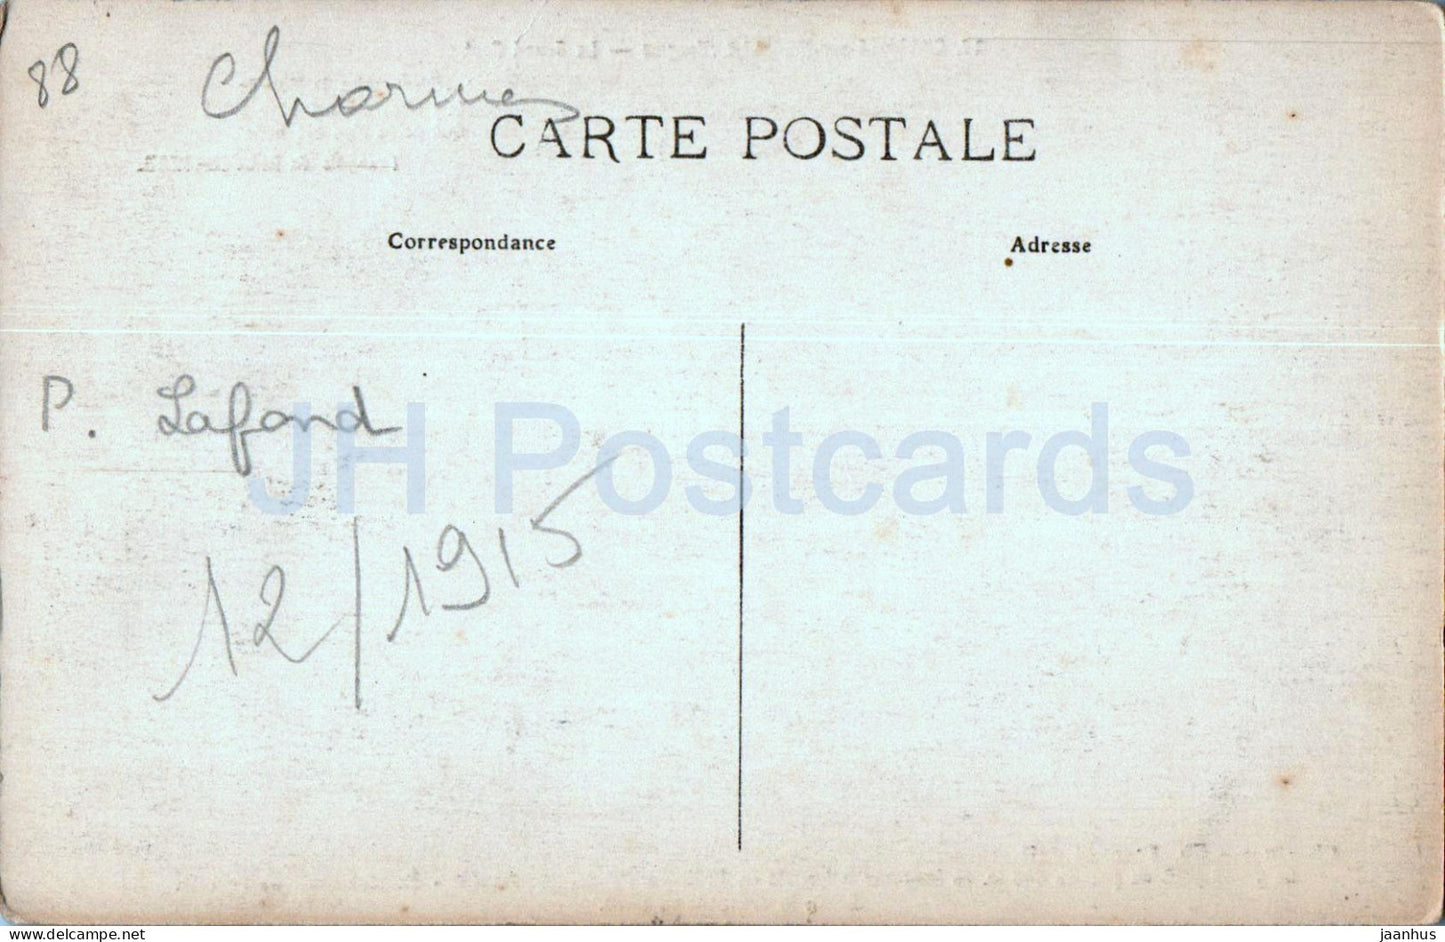 Charmes sur Moselle - Le Grand Pont - Brücke - 17 - alte Postkarte - 1915 - Frankreich - gebraucht 